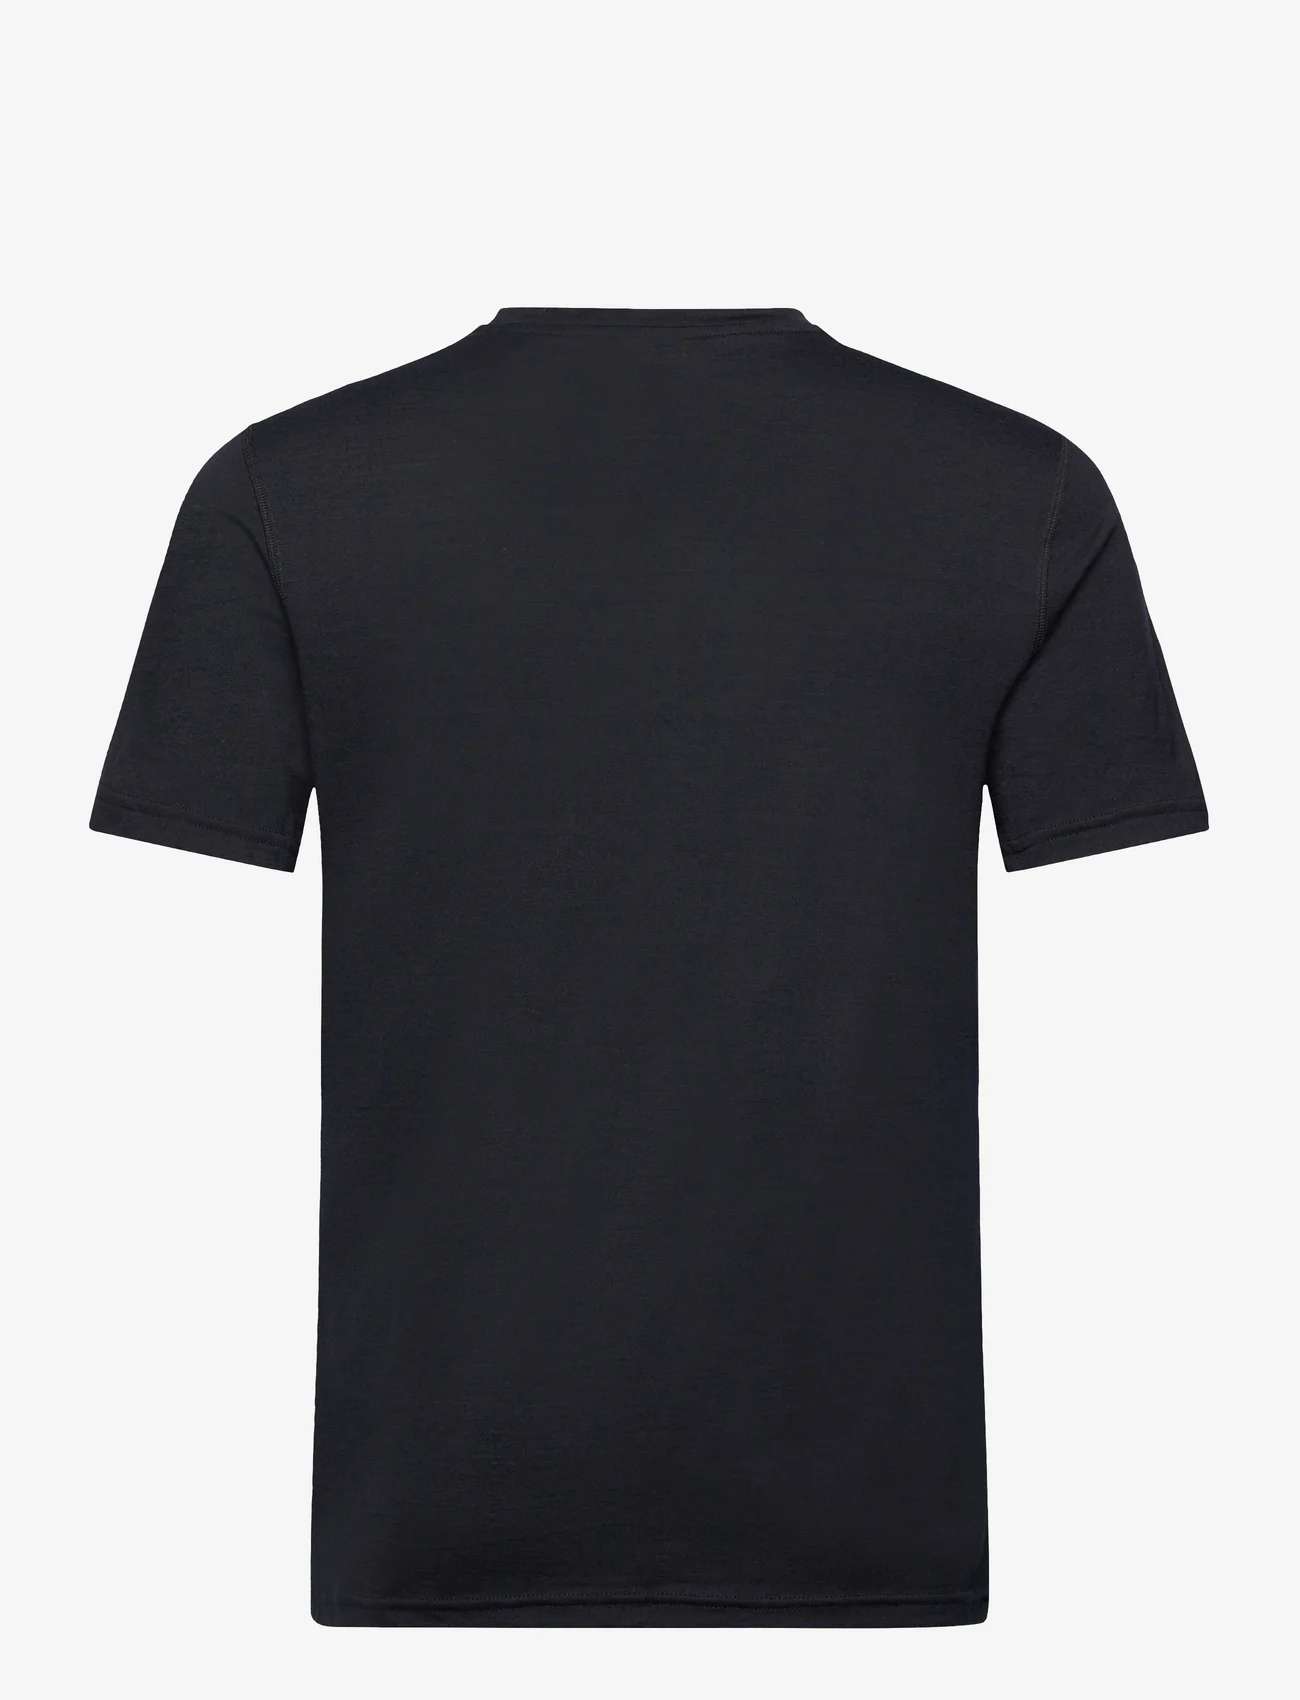 Odlo - ODLO BL TOP crew neck s/s MERINO 160 - t-shirts - black - 1